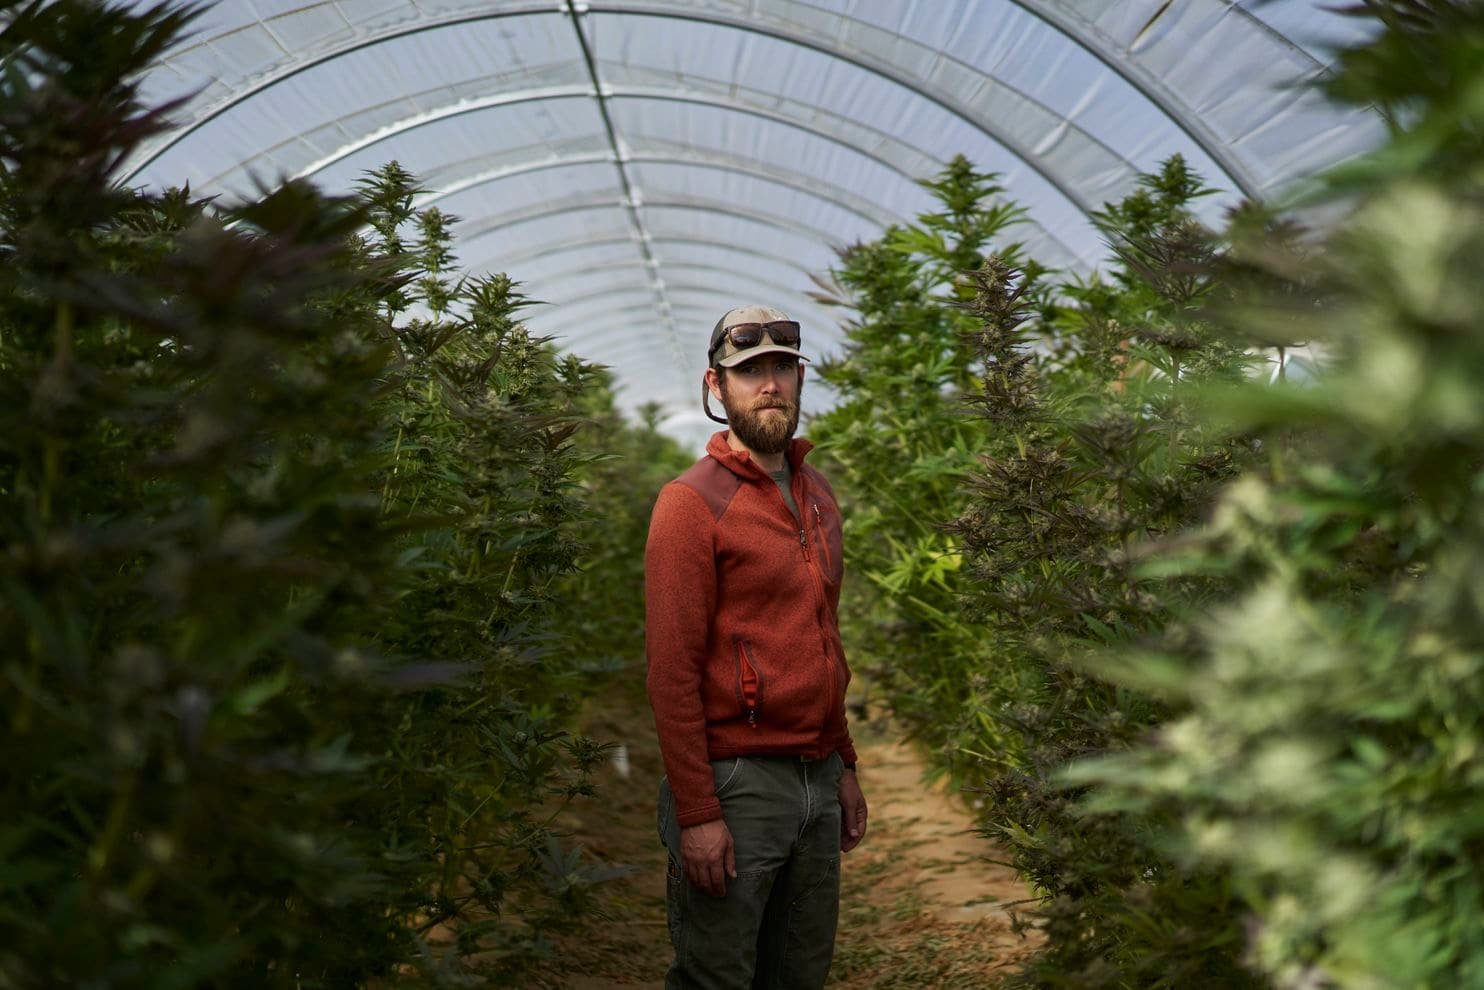 Marijuana is emerging among California’s vineyards